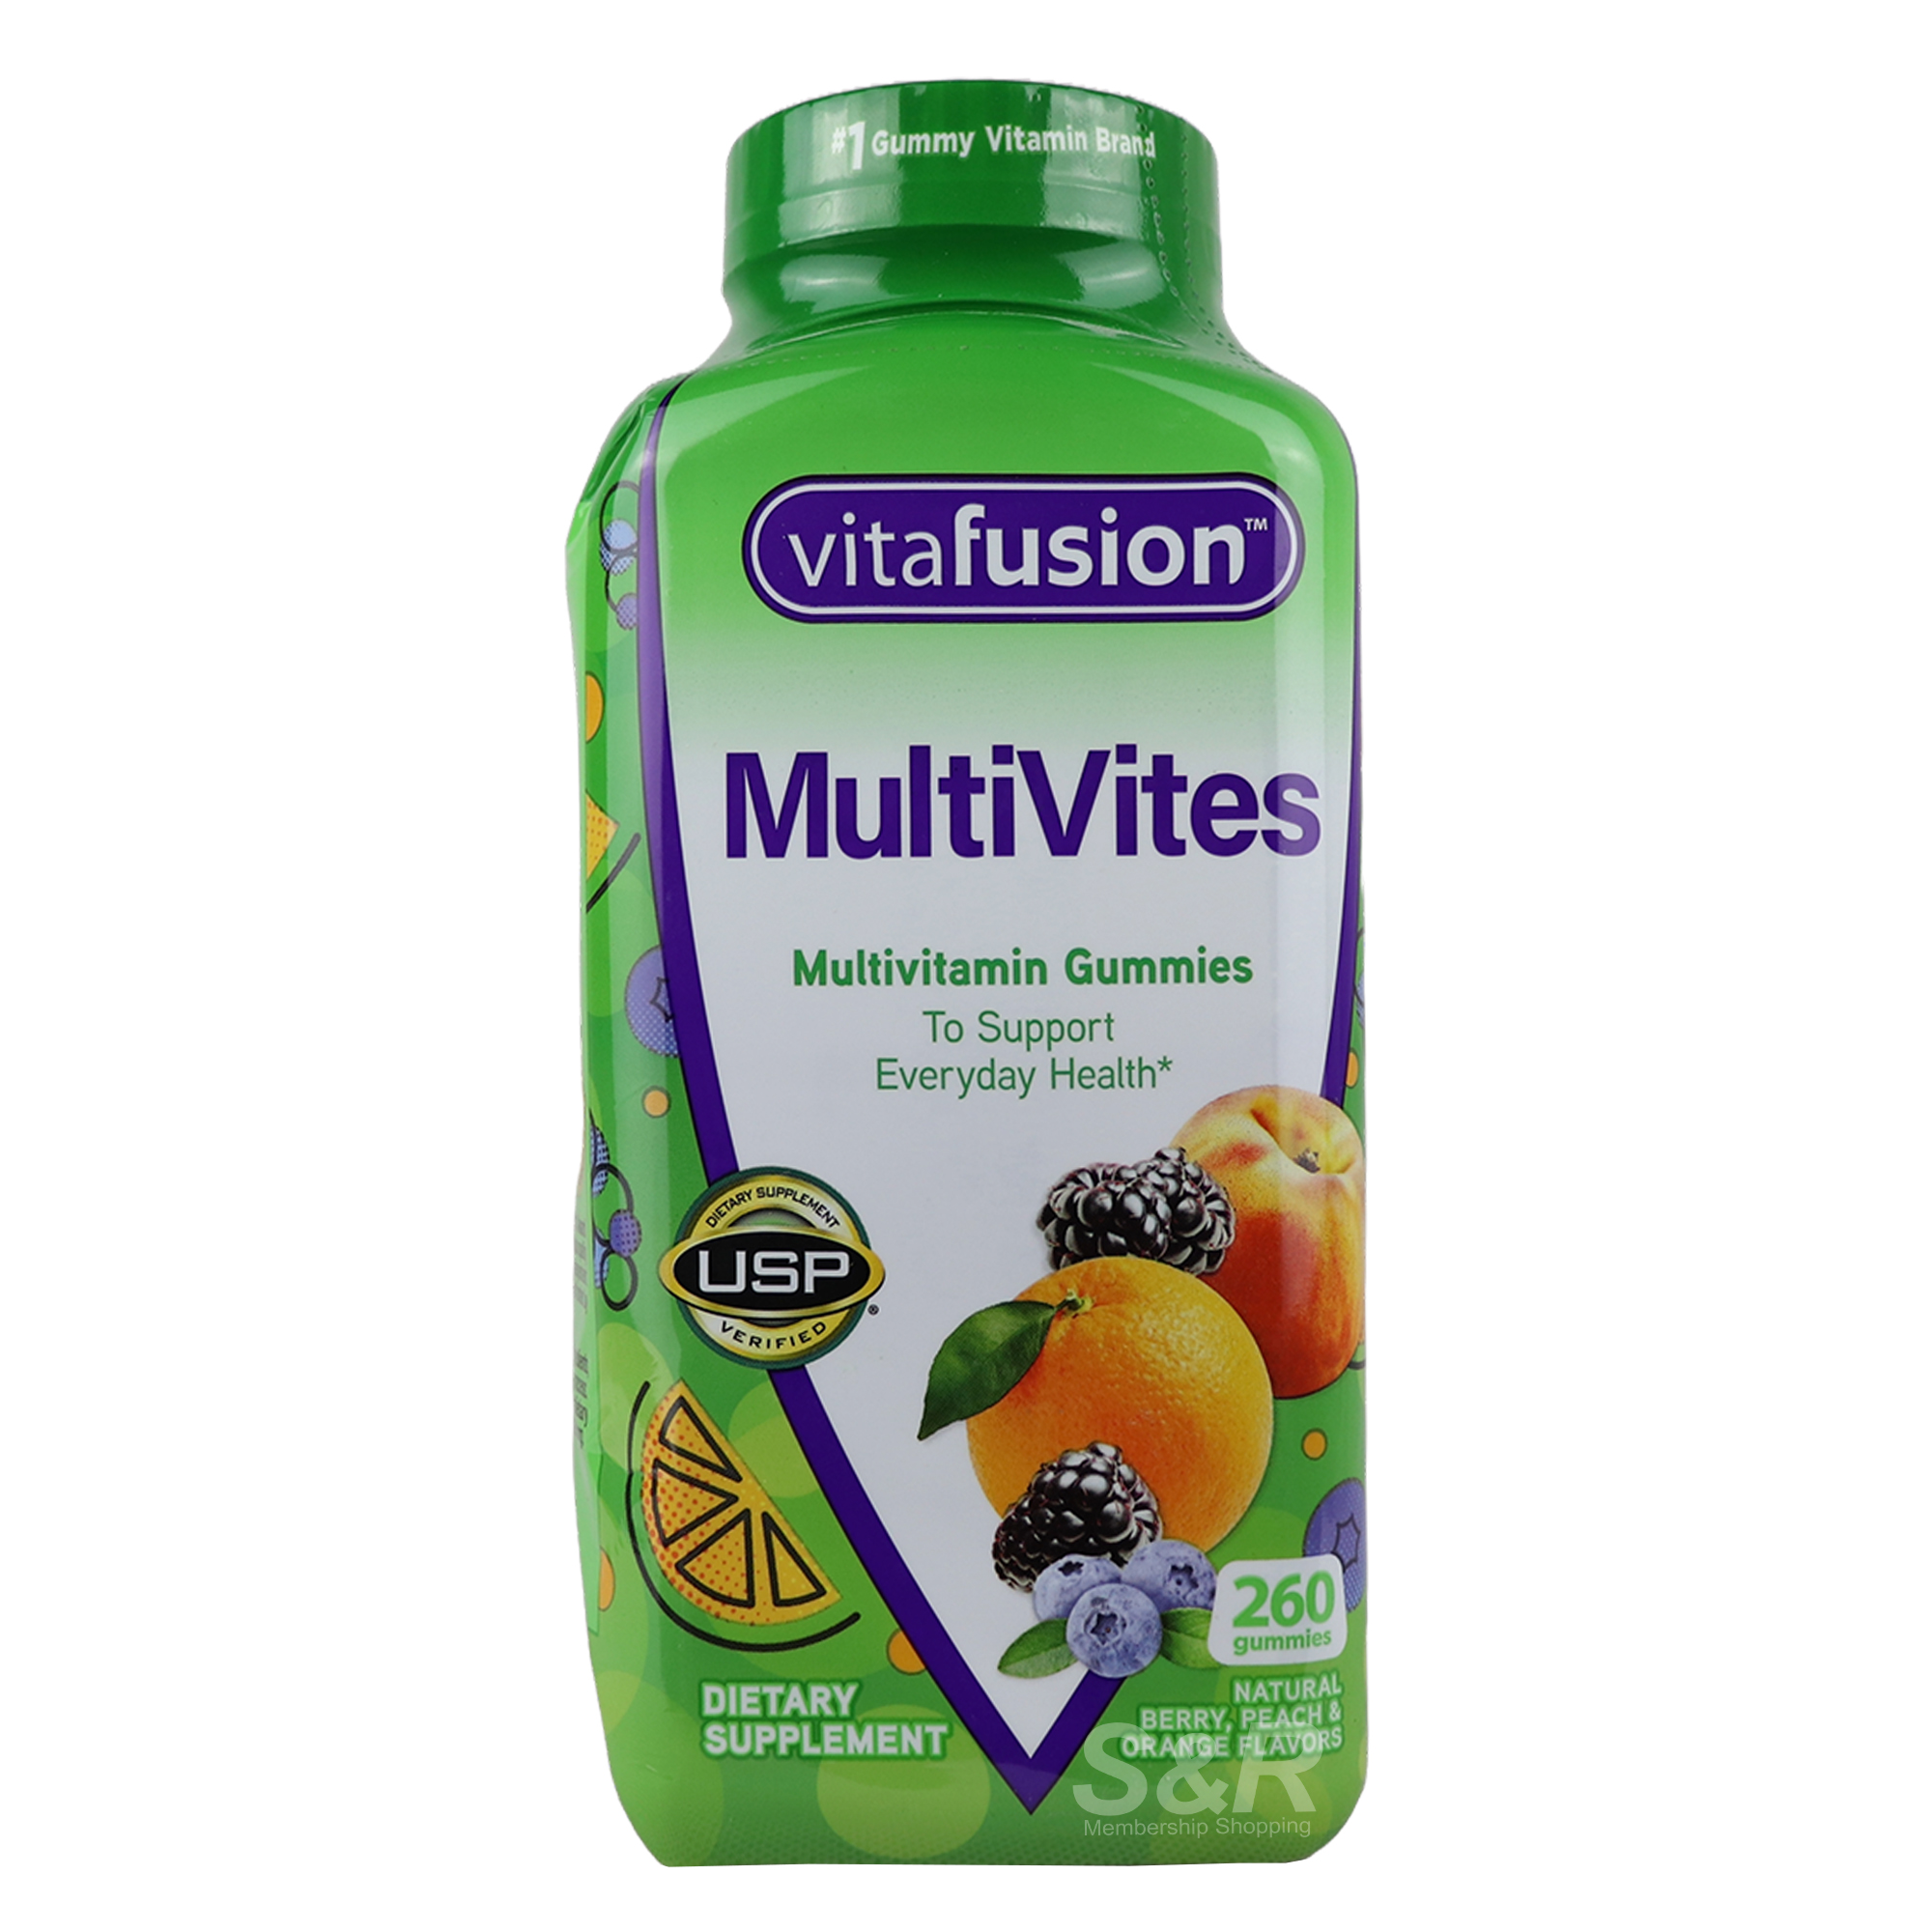 Vitafusion MultiVites 260 Gummies